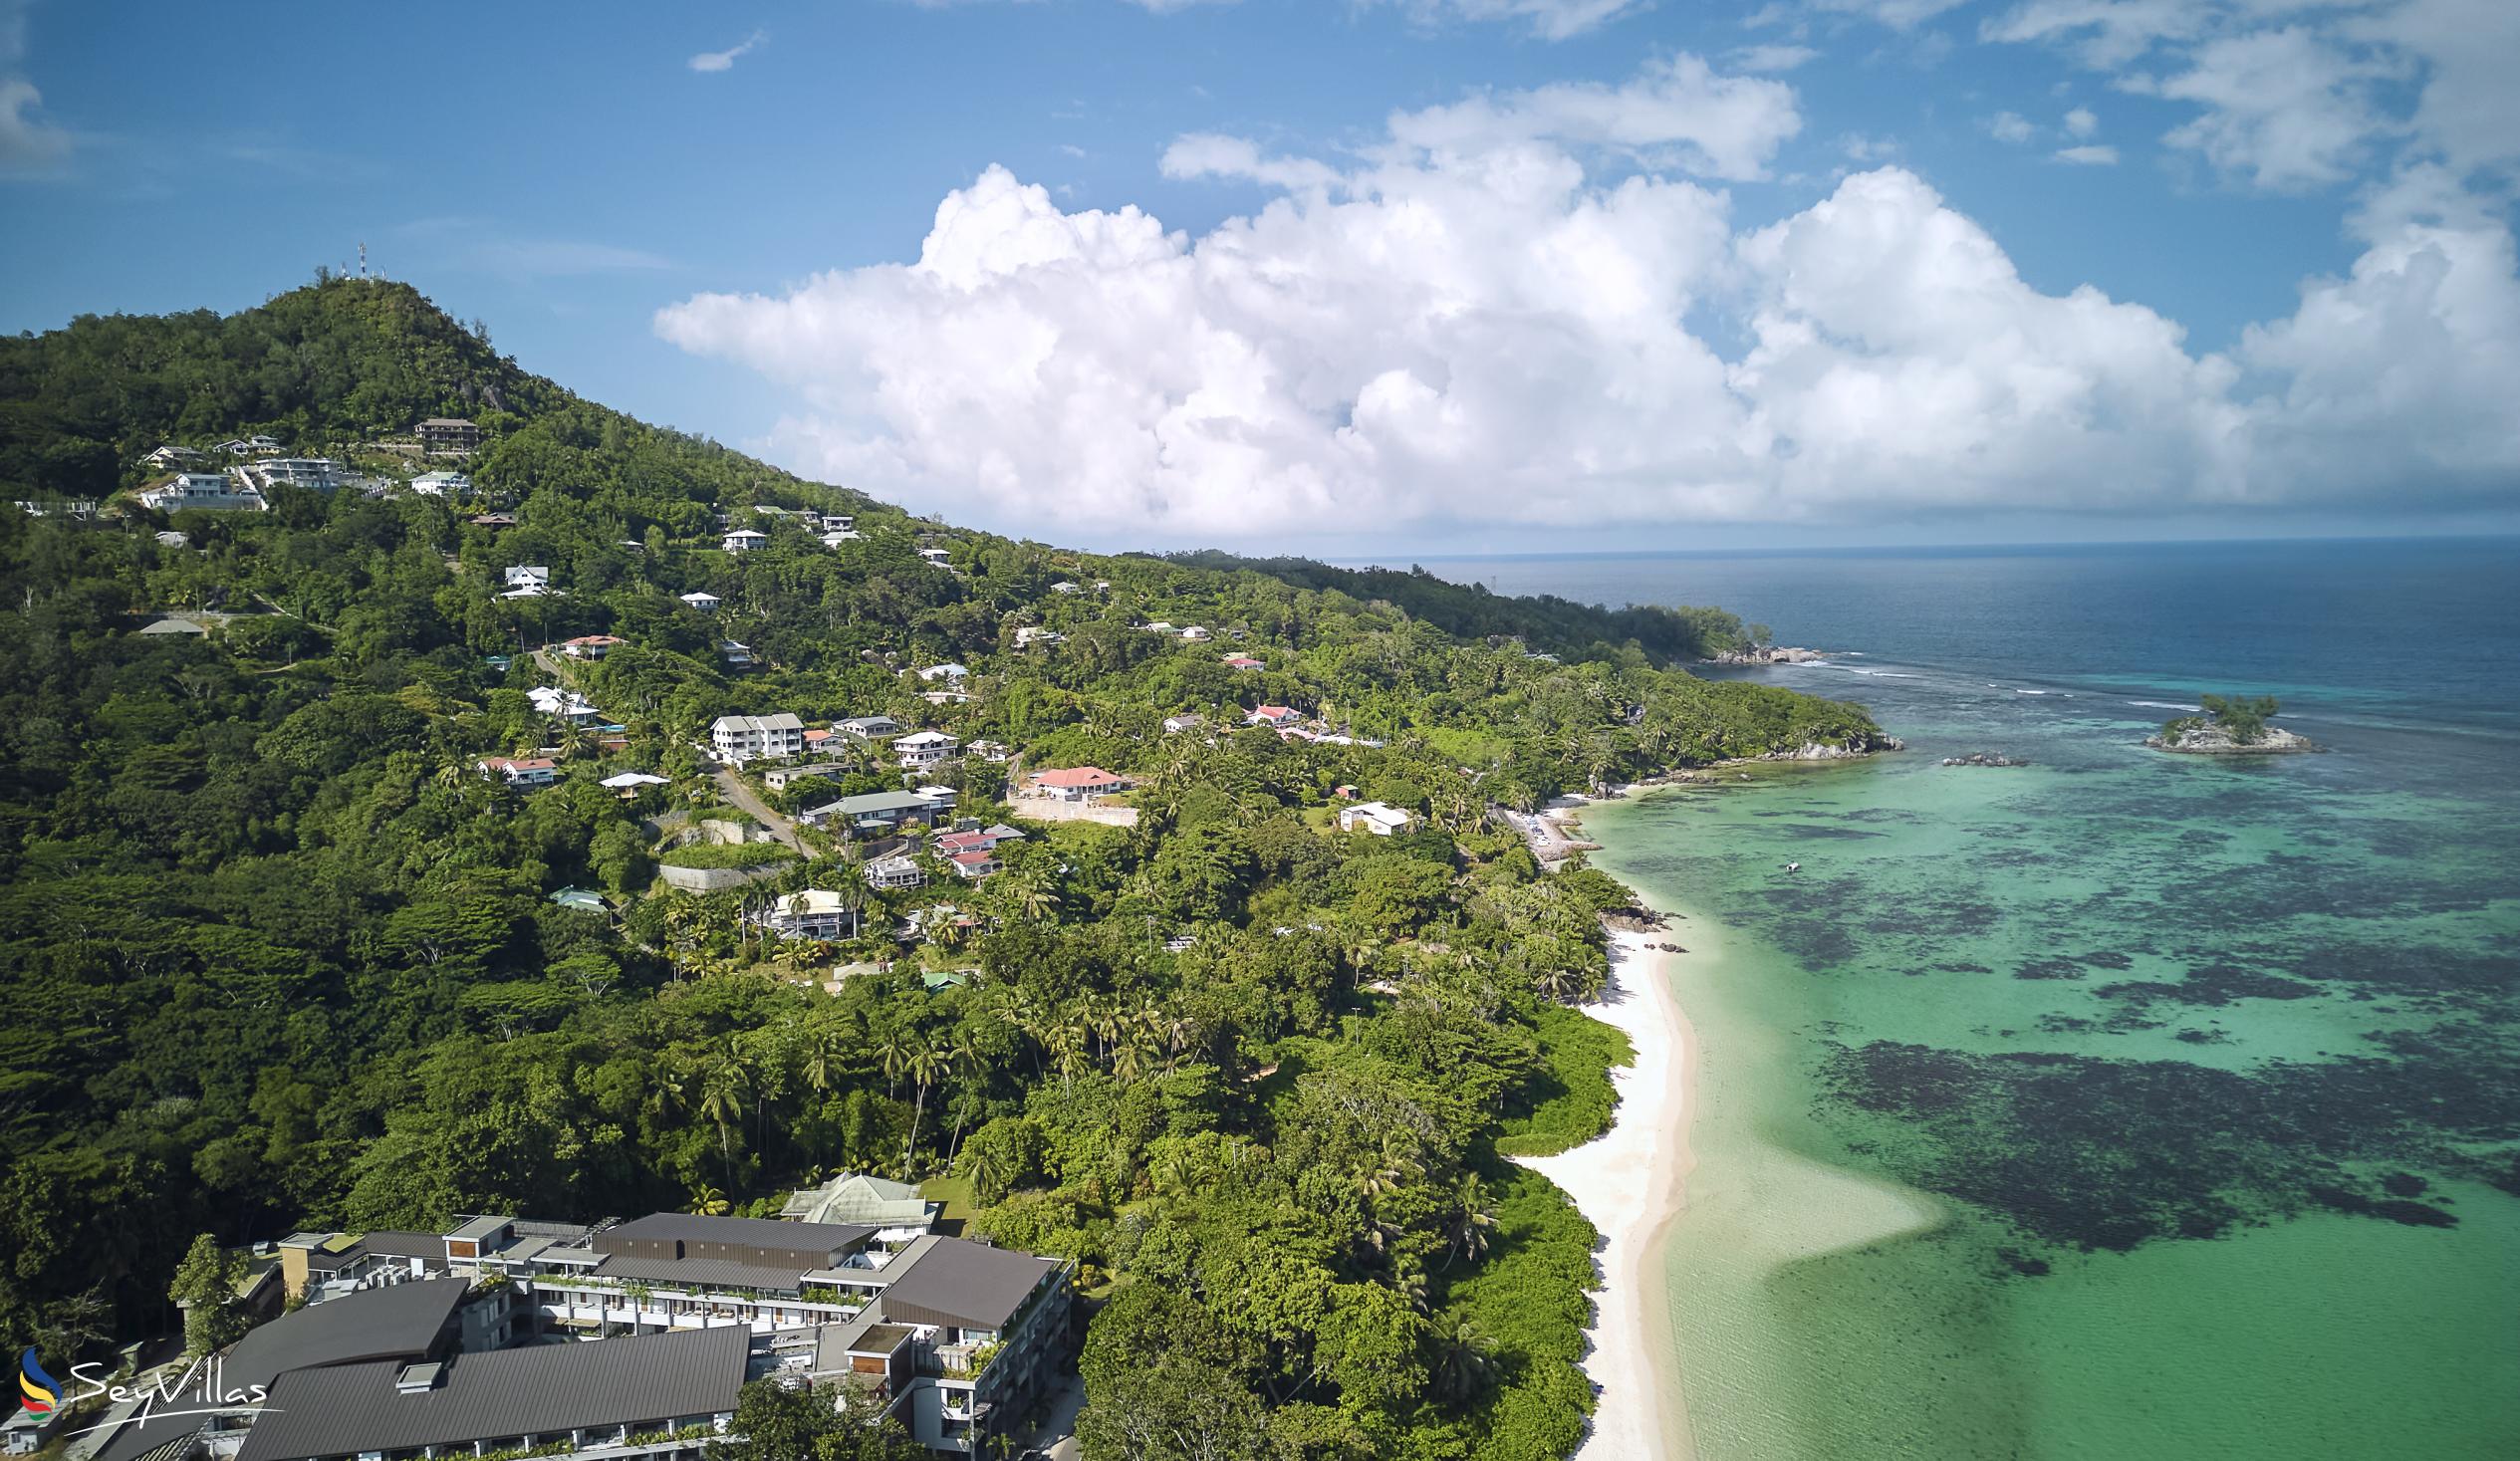 Foto 26: laila Resort - Posizione - Mahé (Seychelles)